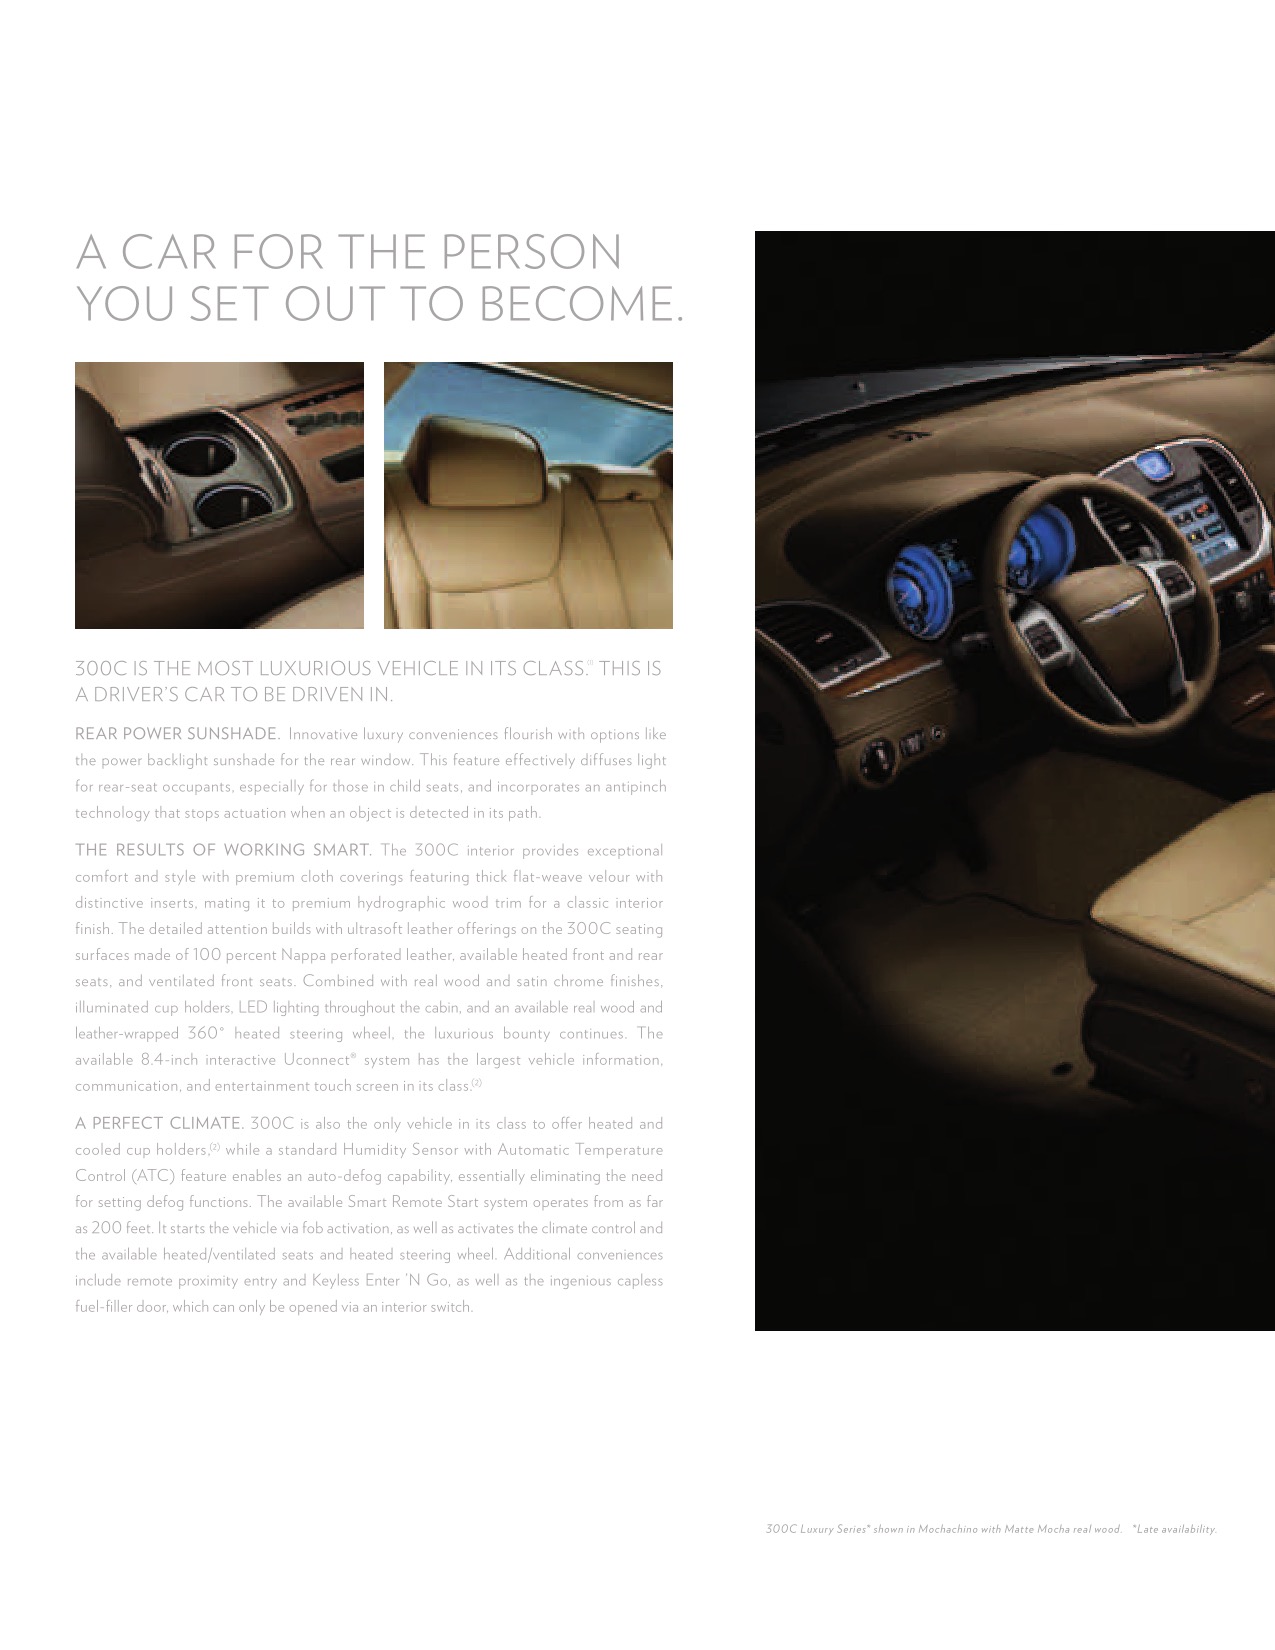 2012 Chrysler 300 Brochure Page 48